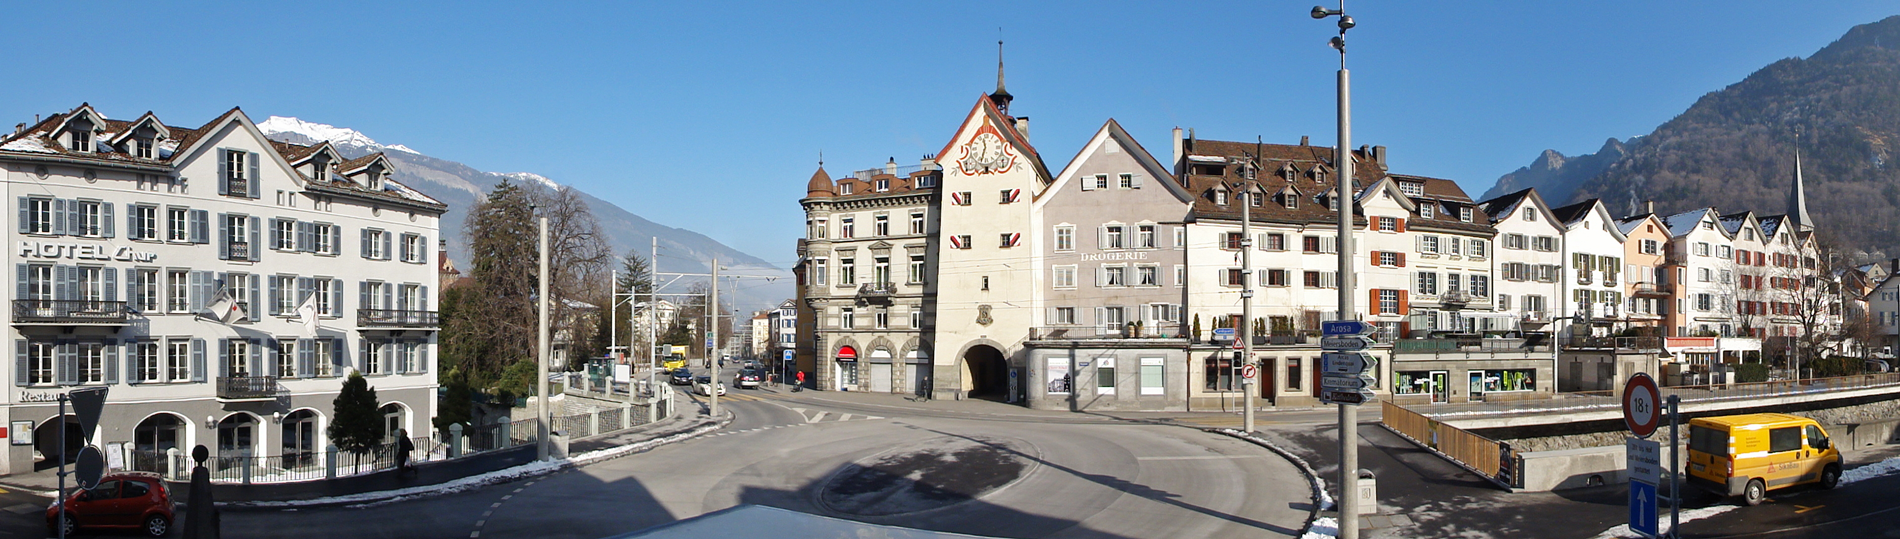 Hotel Chur am Obertor in Chur